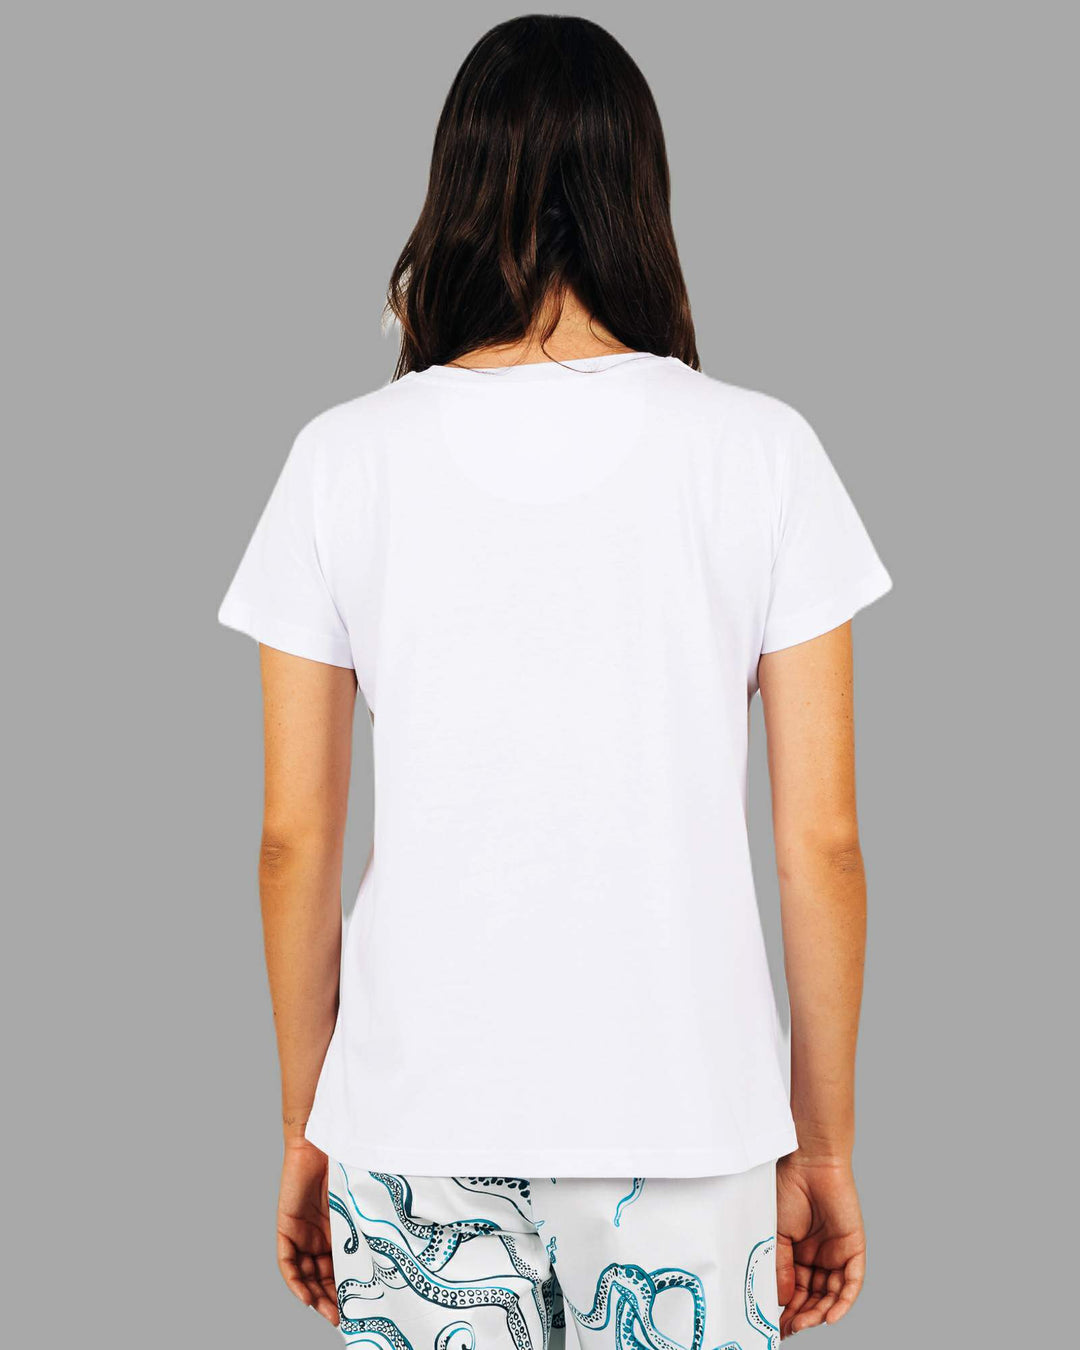 Womens t-shirt white short sleeve